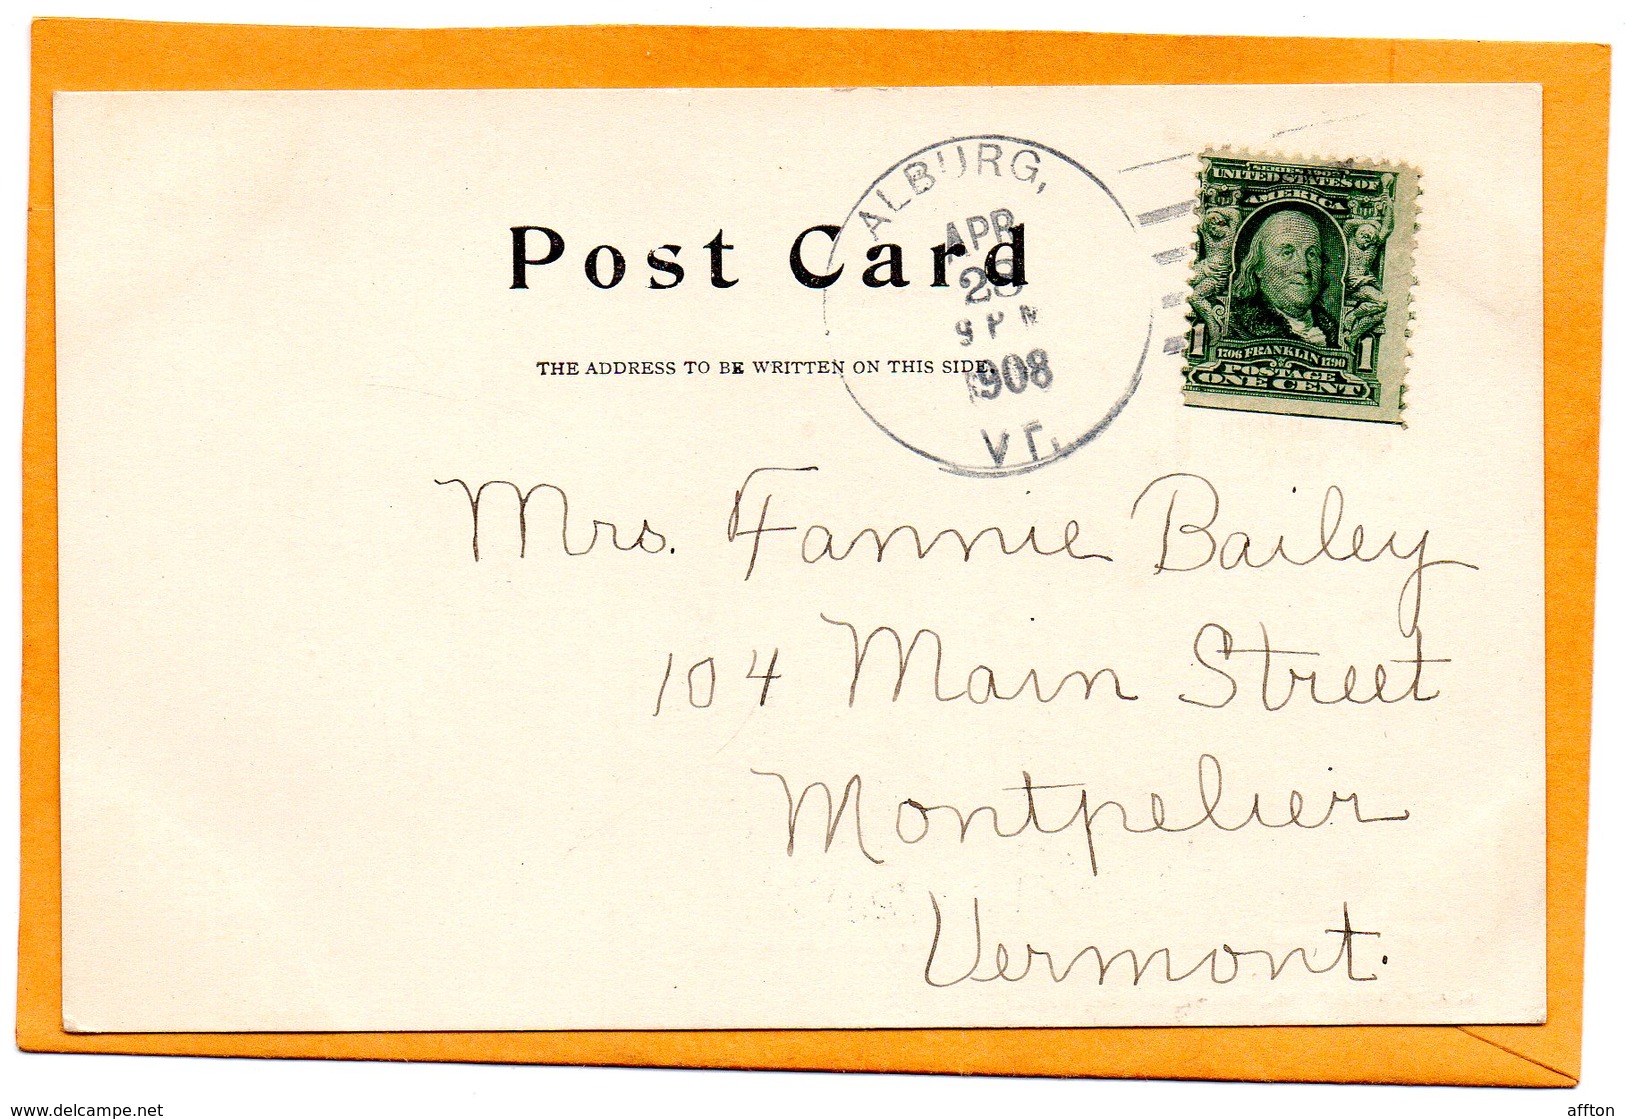 Alburgh VT 1907 Postcard - Burlington